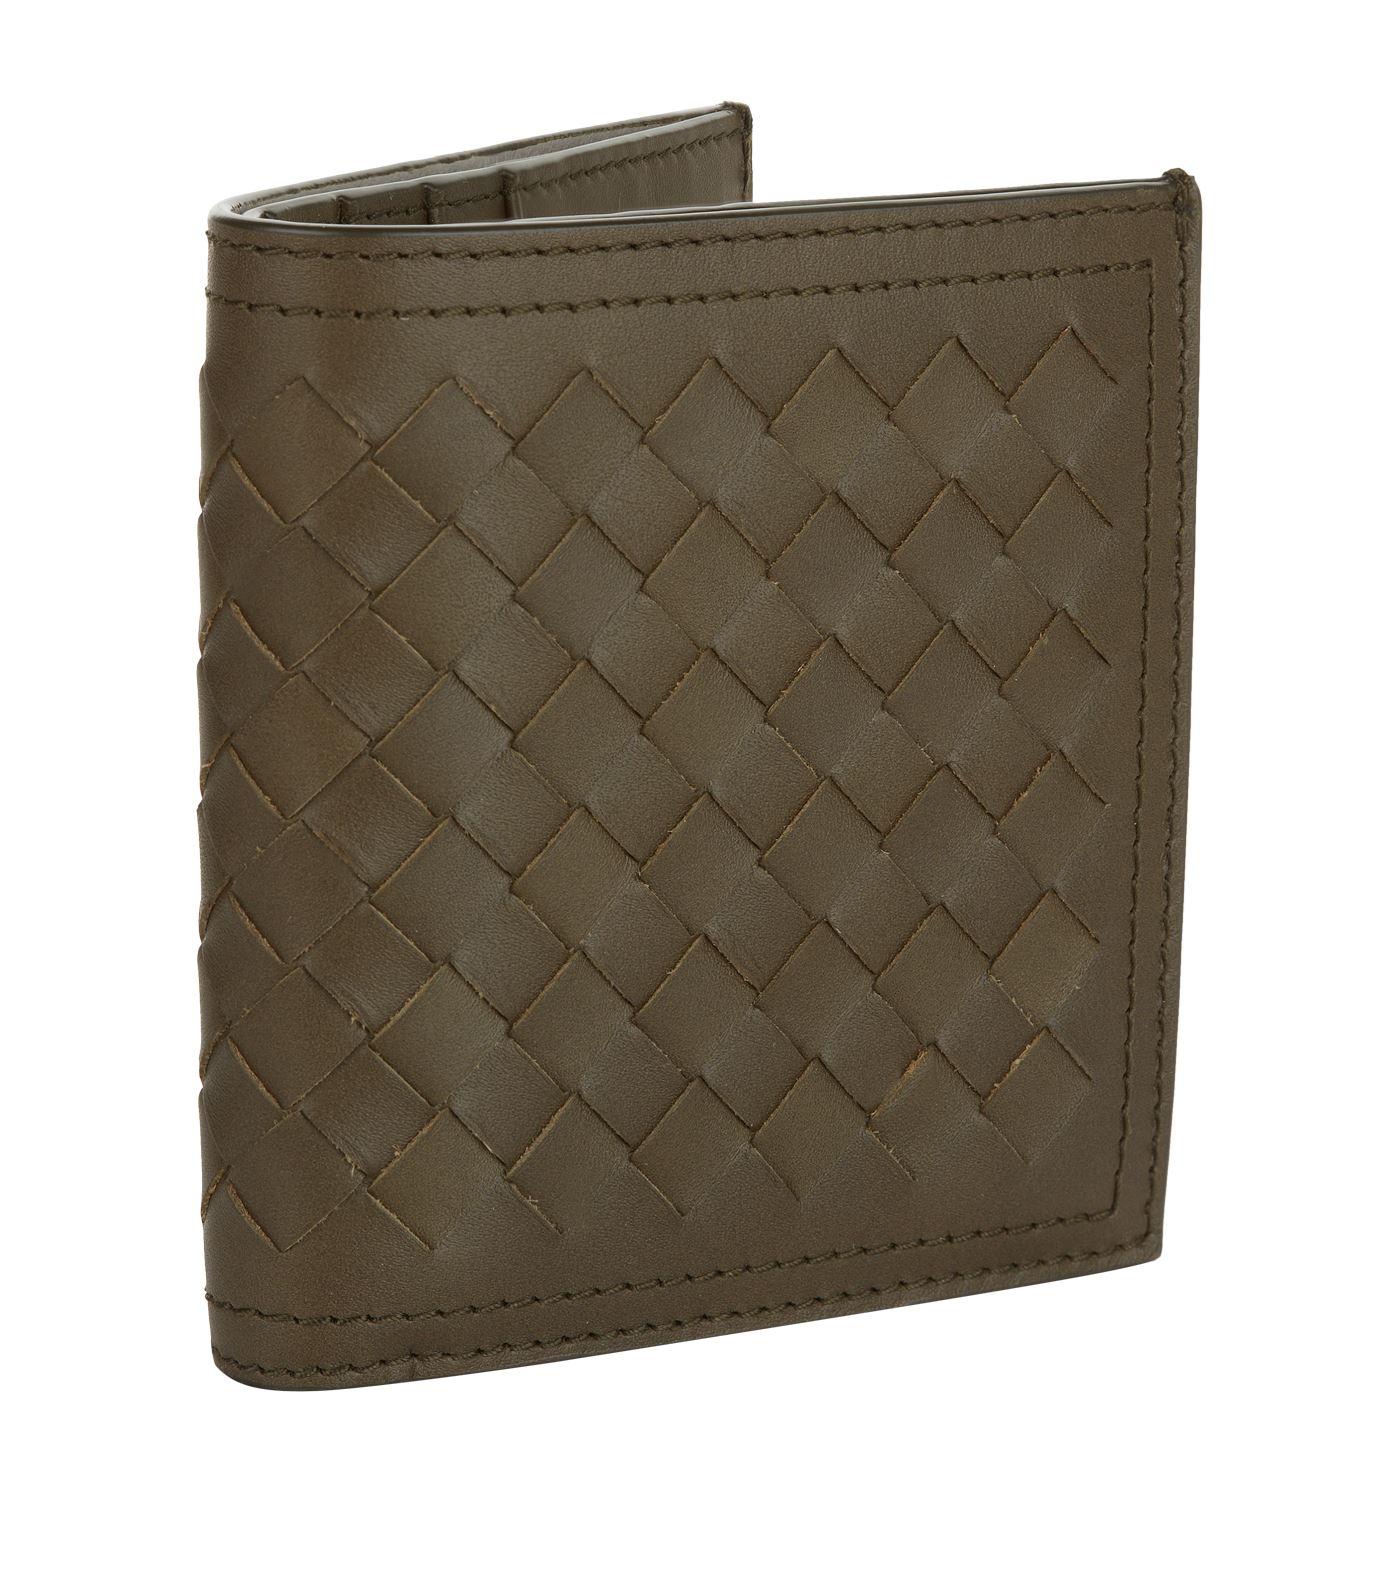 Lyst - Bottega Veneta Intrecciato Weave Leather Bifold Wallet in Brown for Men